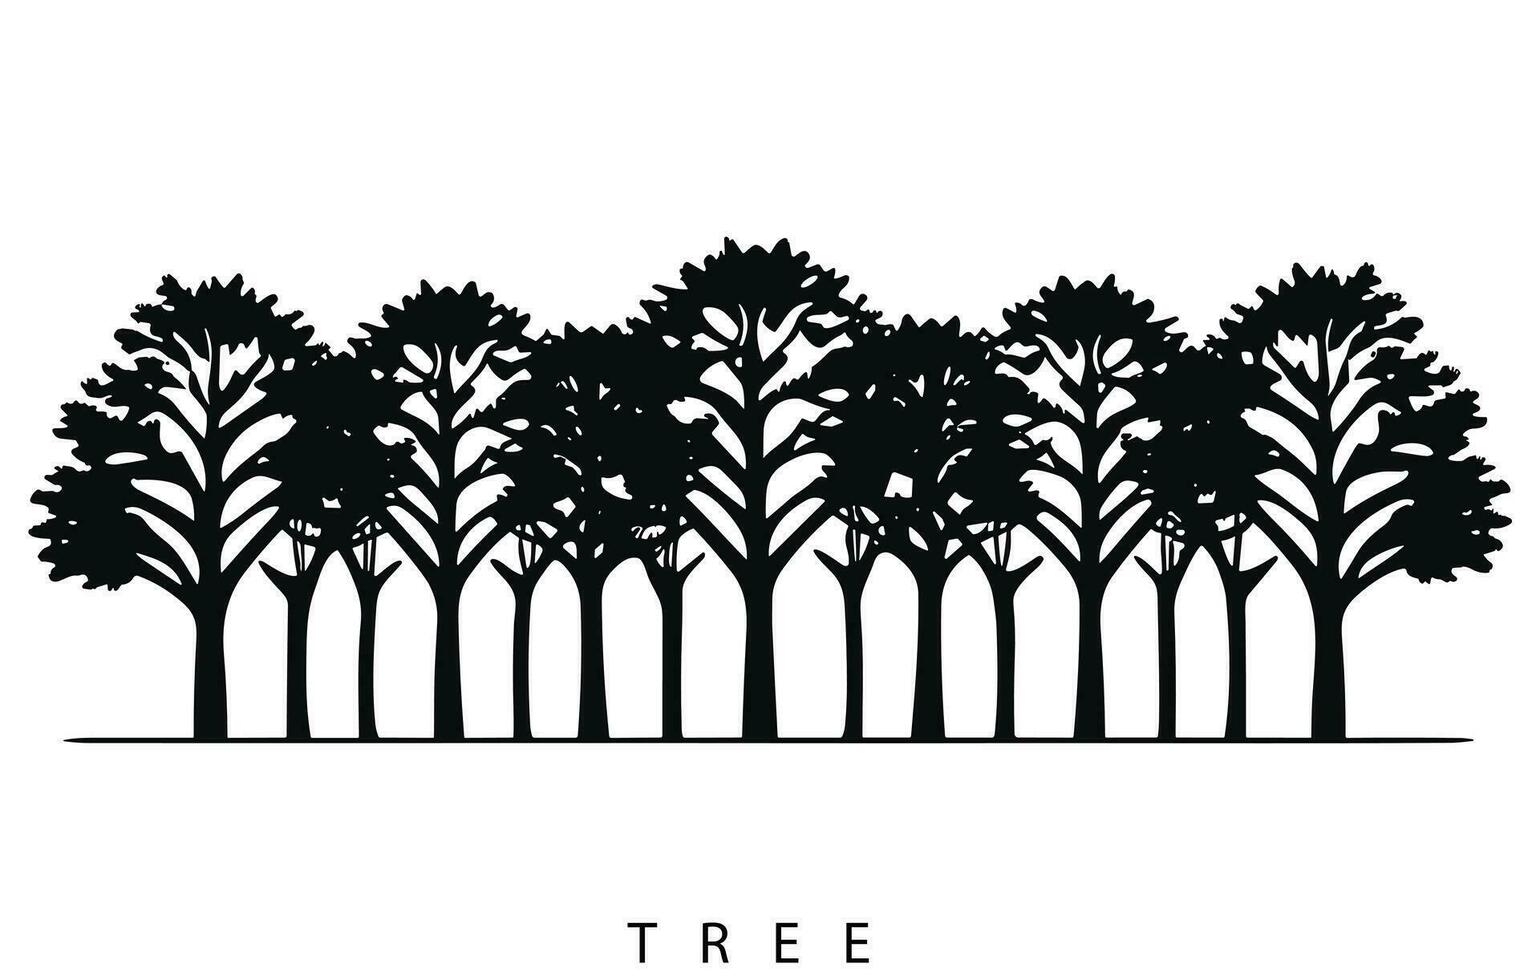 árbol siluetas vector ilustración, árbol silueta aislado en blanco antecedentes